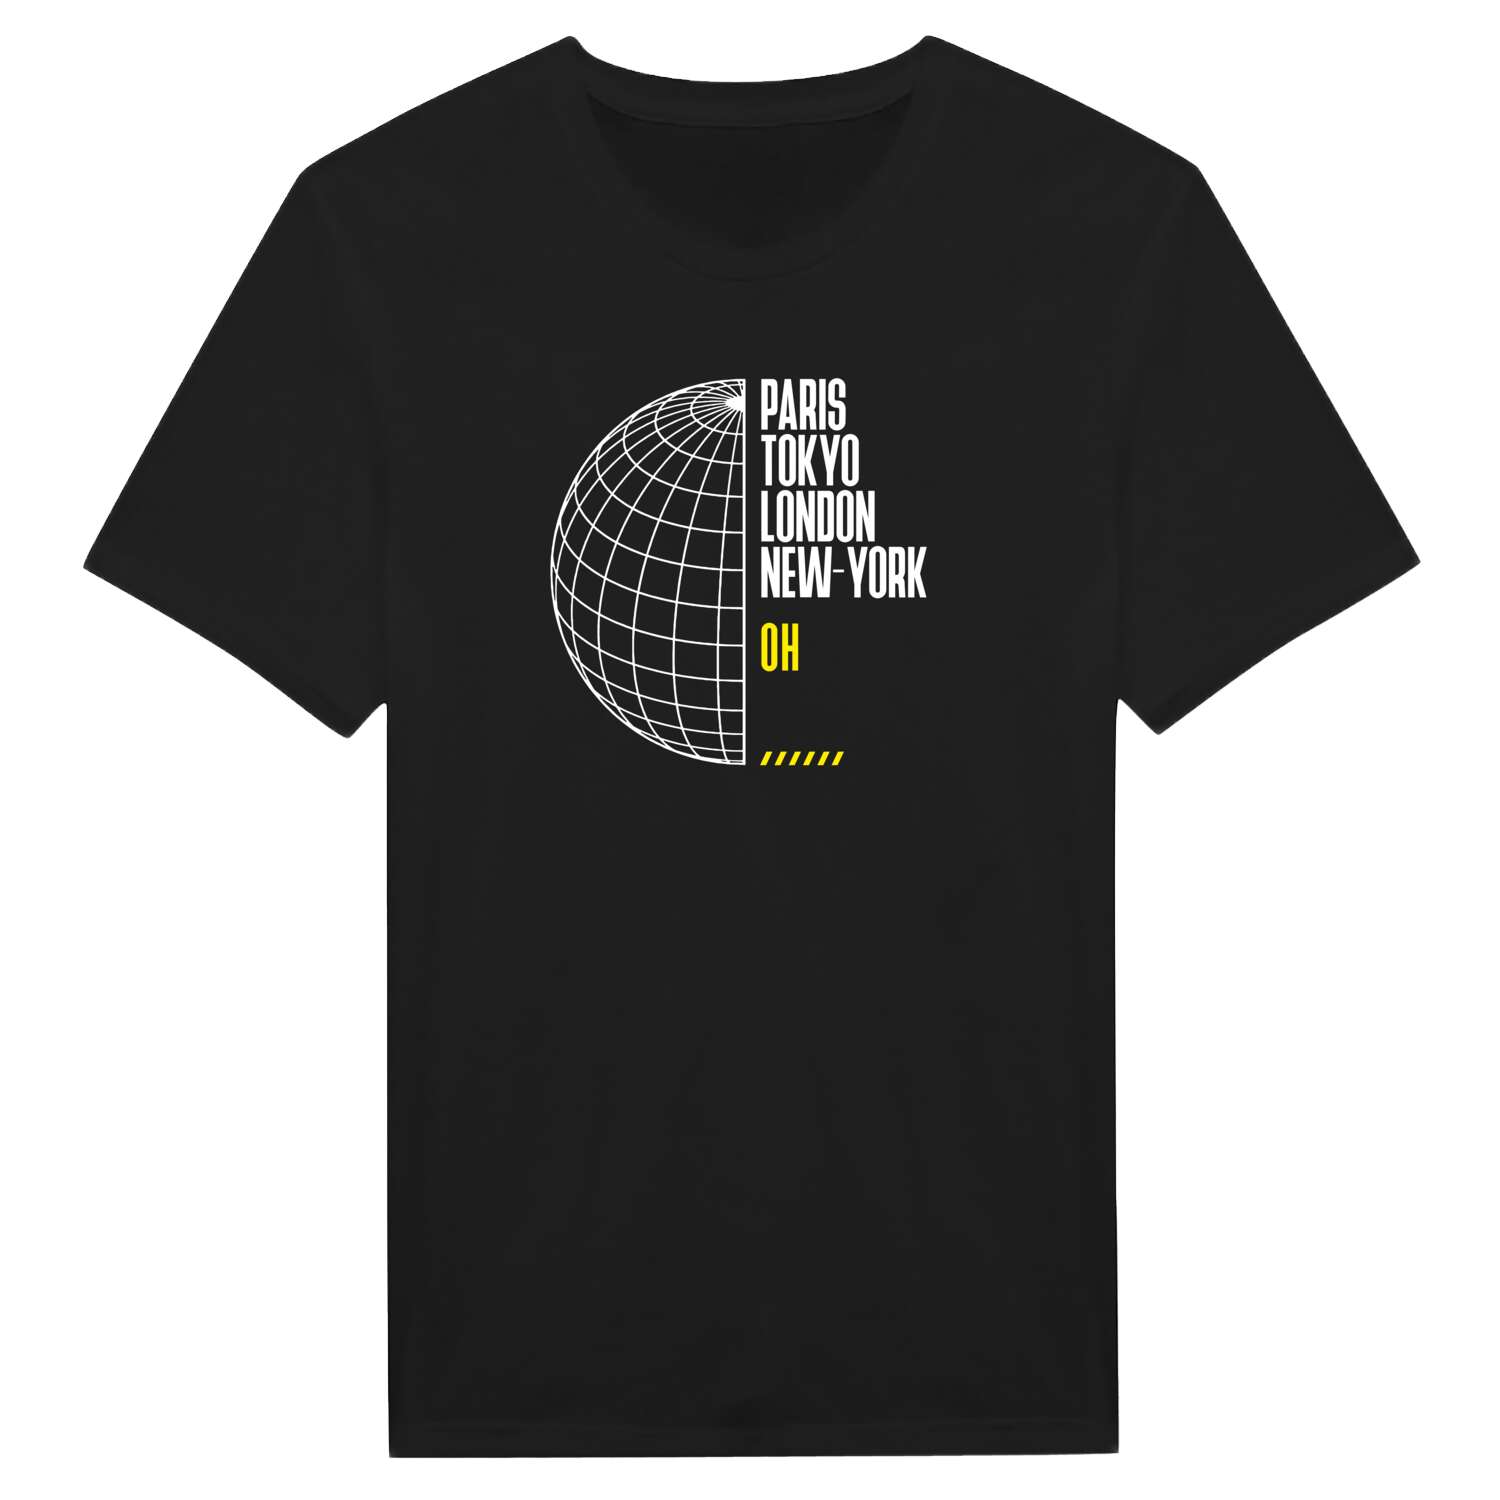 Oh T-Shirt »Paris Tokyo London«